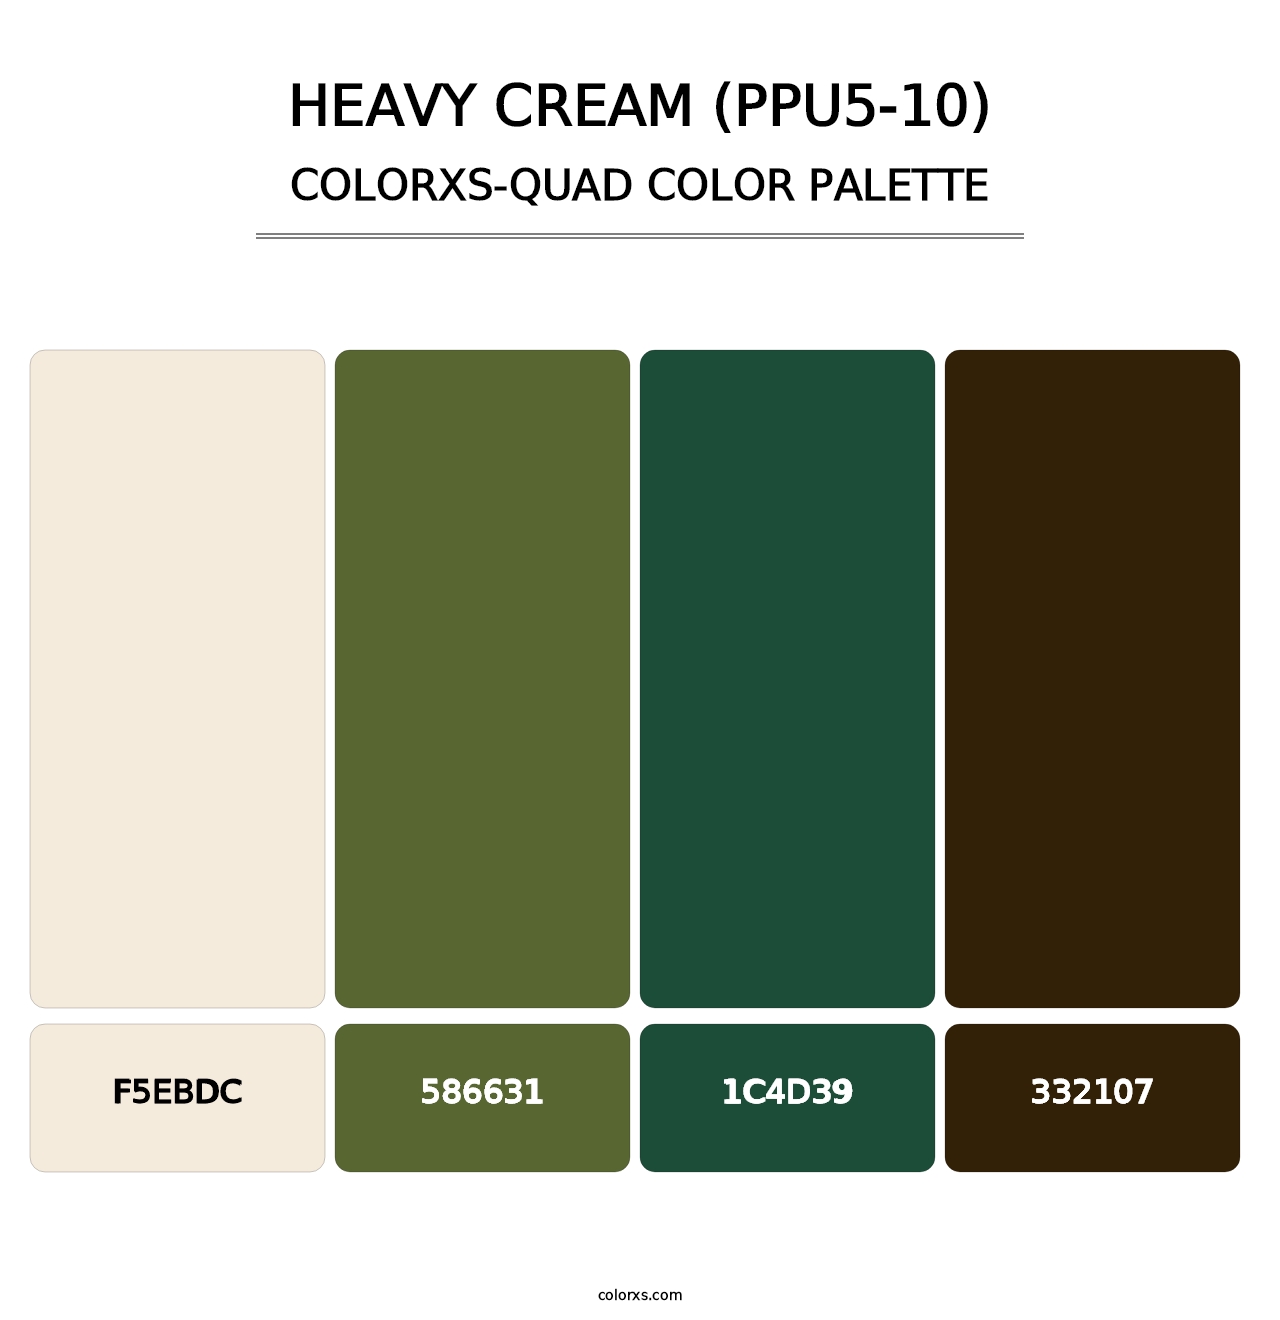 Heavy Cream (PPU5-10) - Colorxs Quad Palette